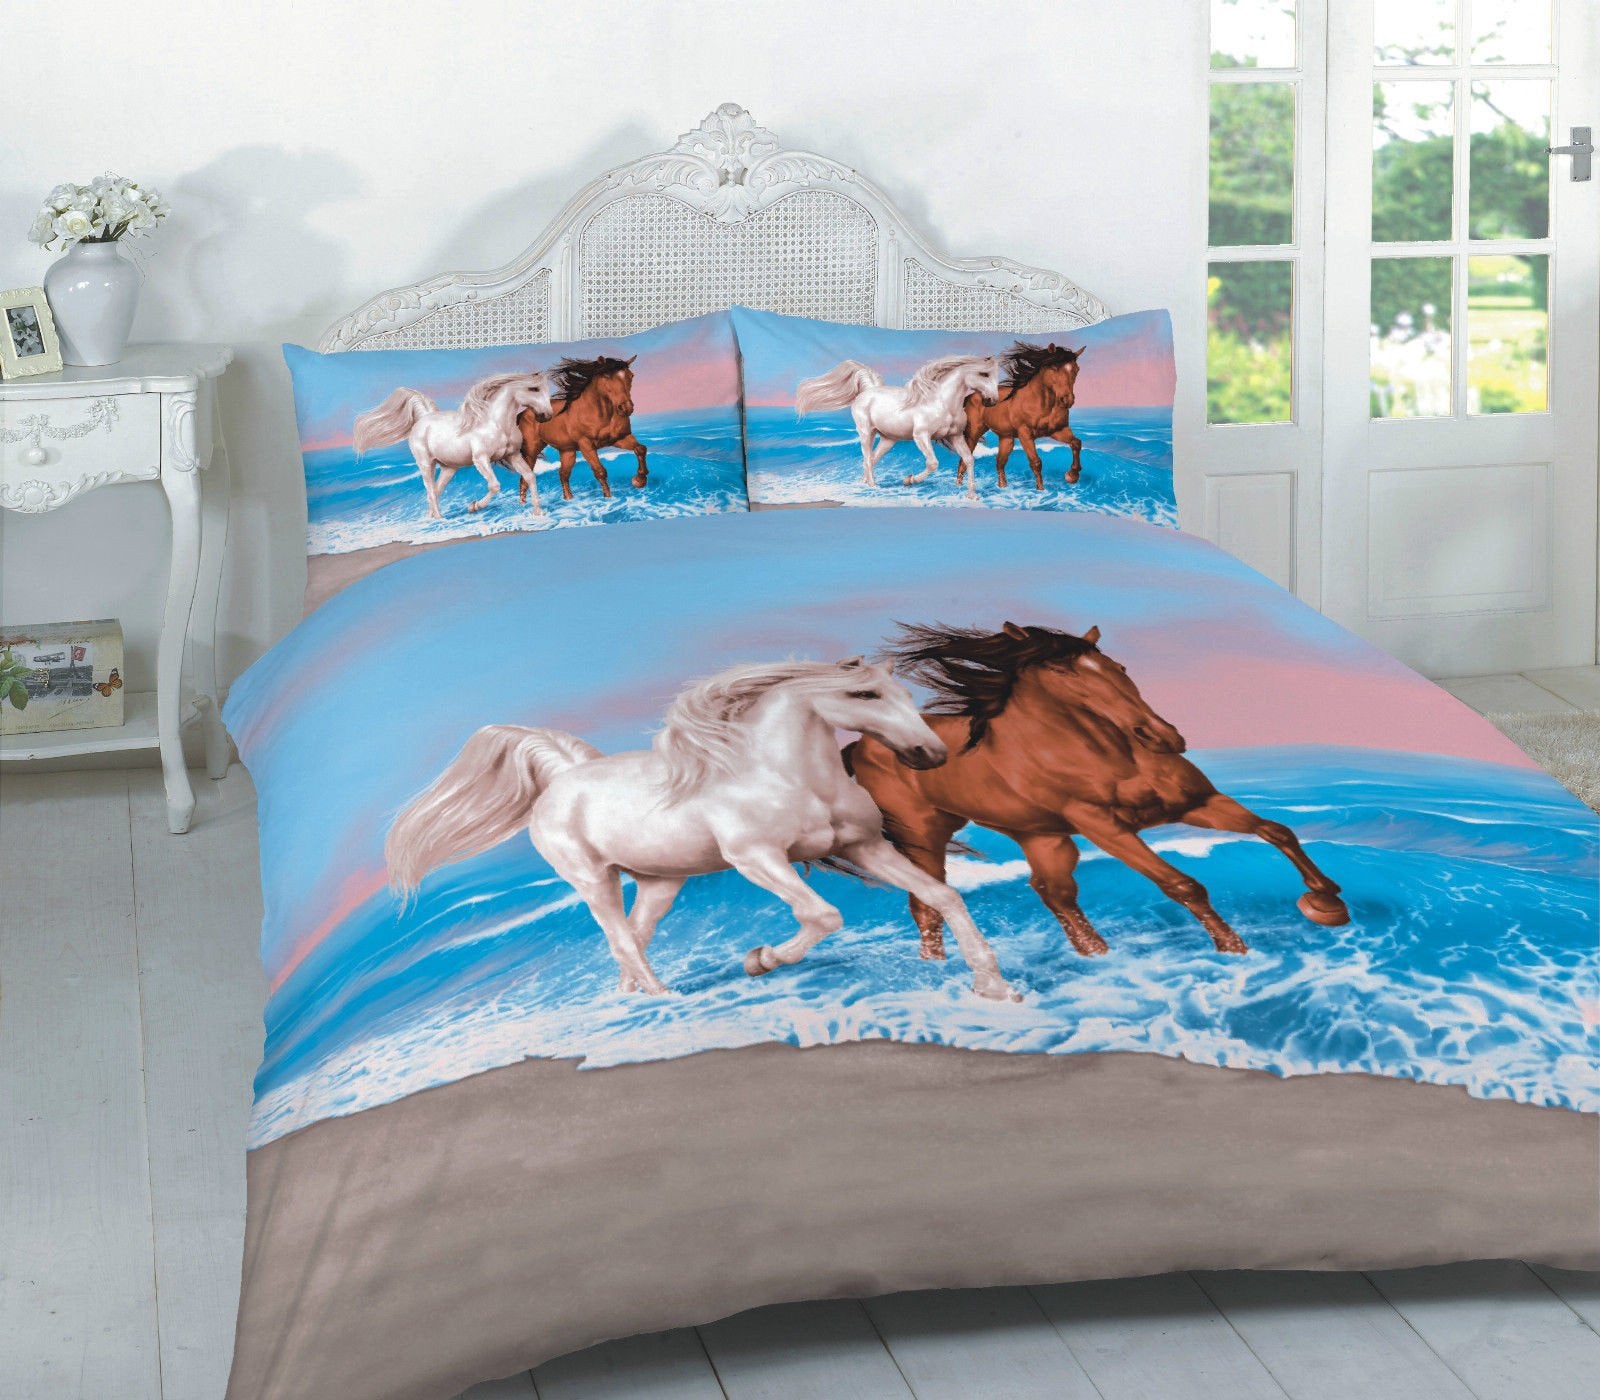 Duvet Covers Sets Beach Horse Duvet Sets Horse Bedding